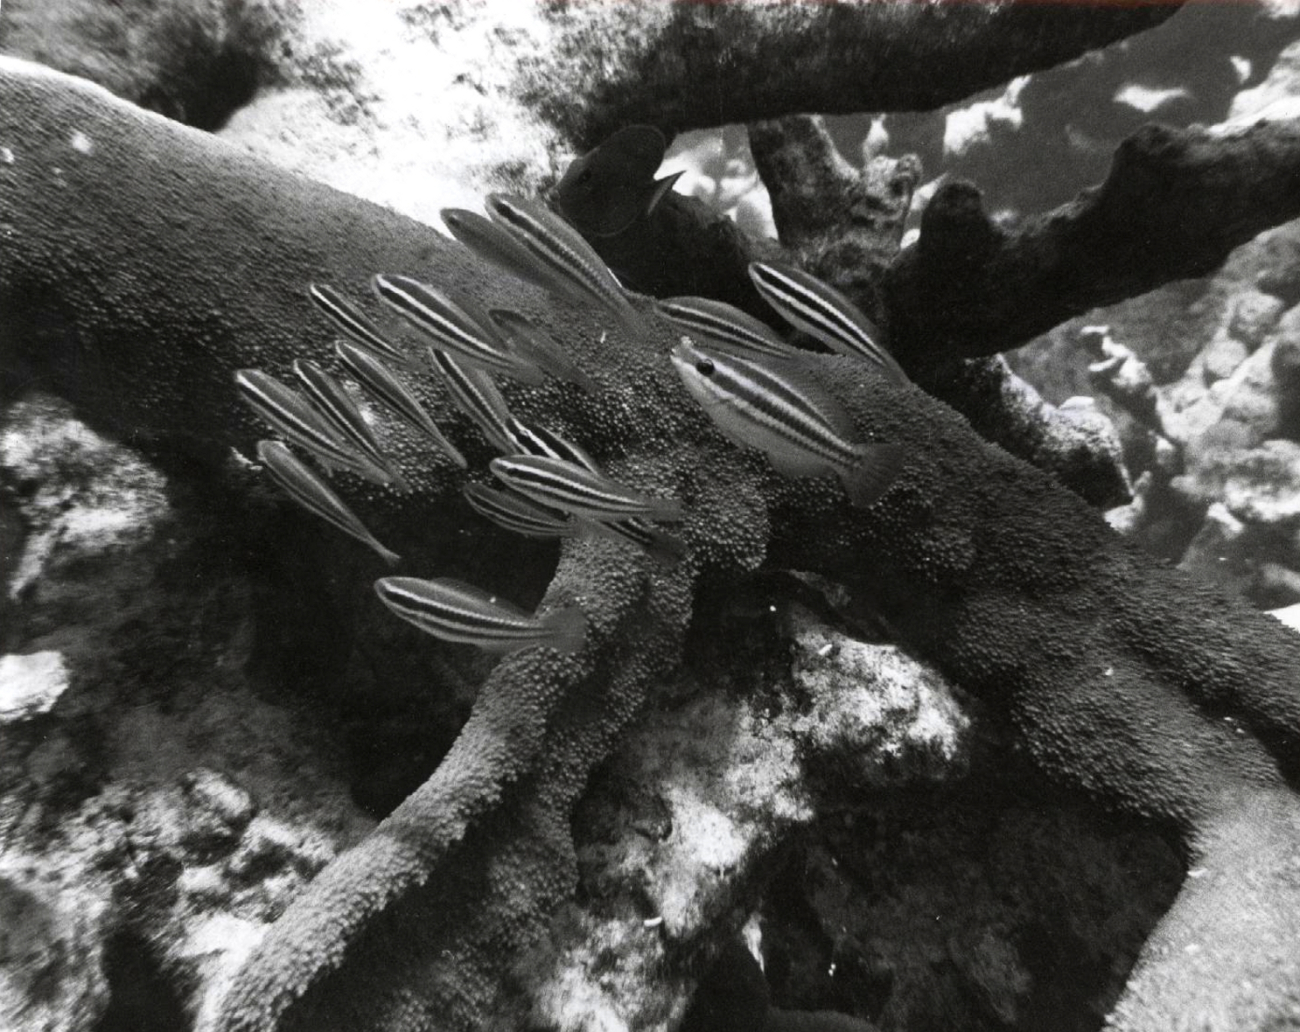 Scenes among massive elkhorn coral near underwater trail